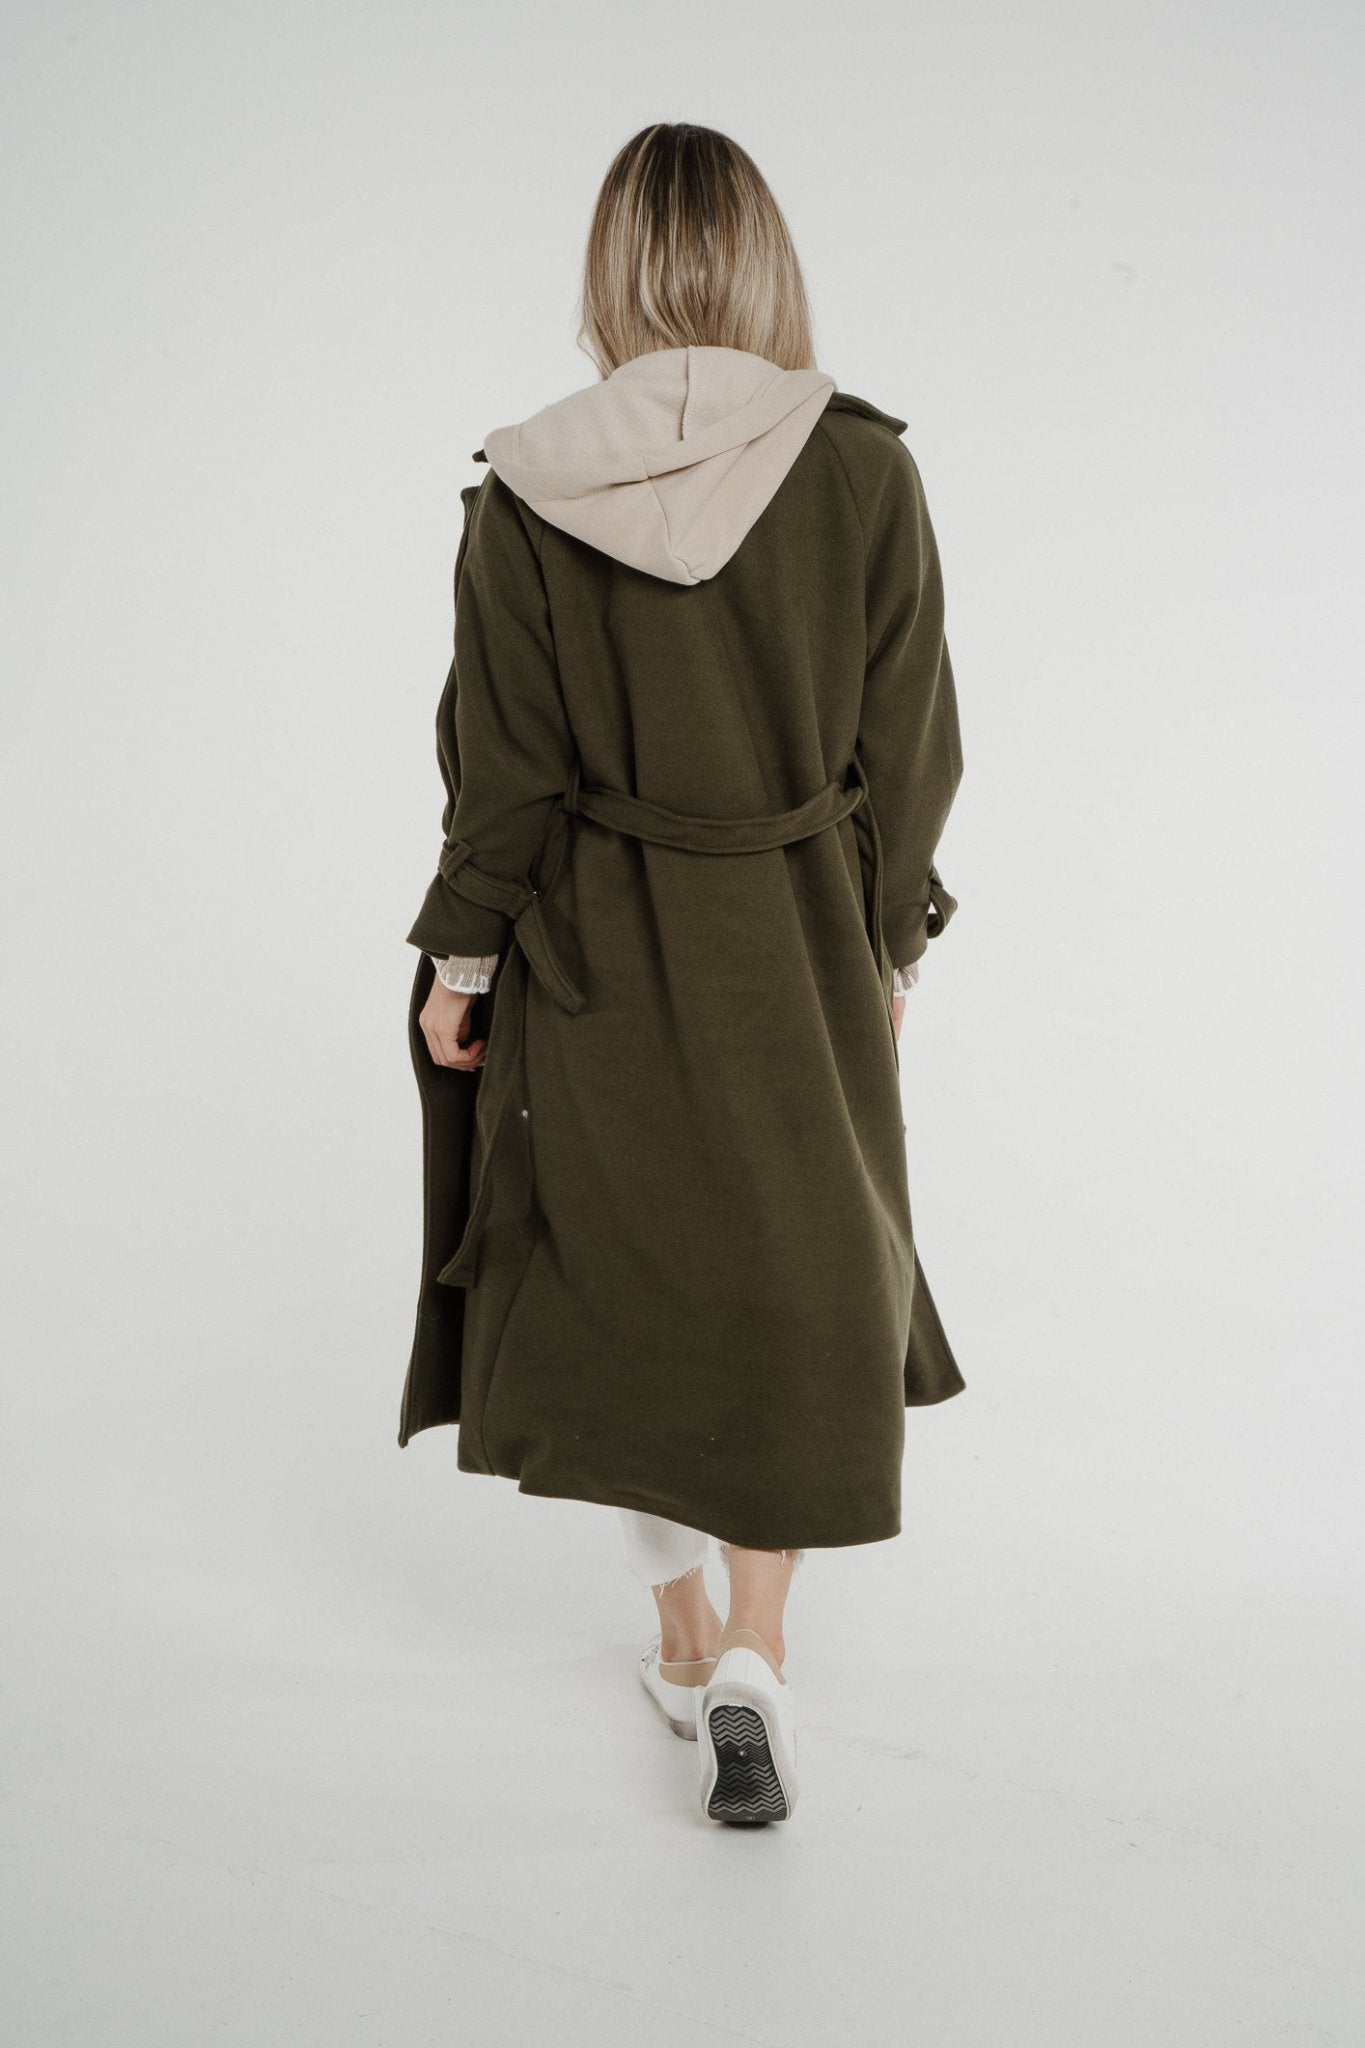 Kelly Layered Hooded Coat In Khaki - The Walk in Wardrobe